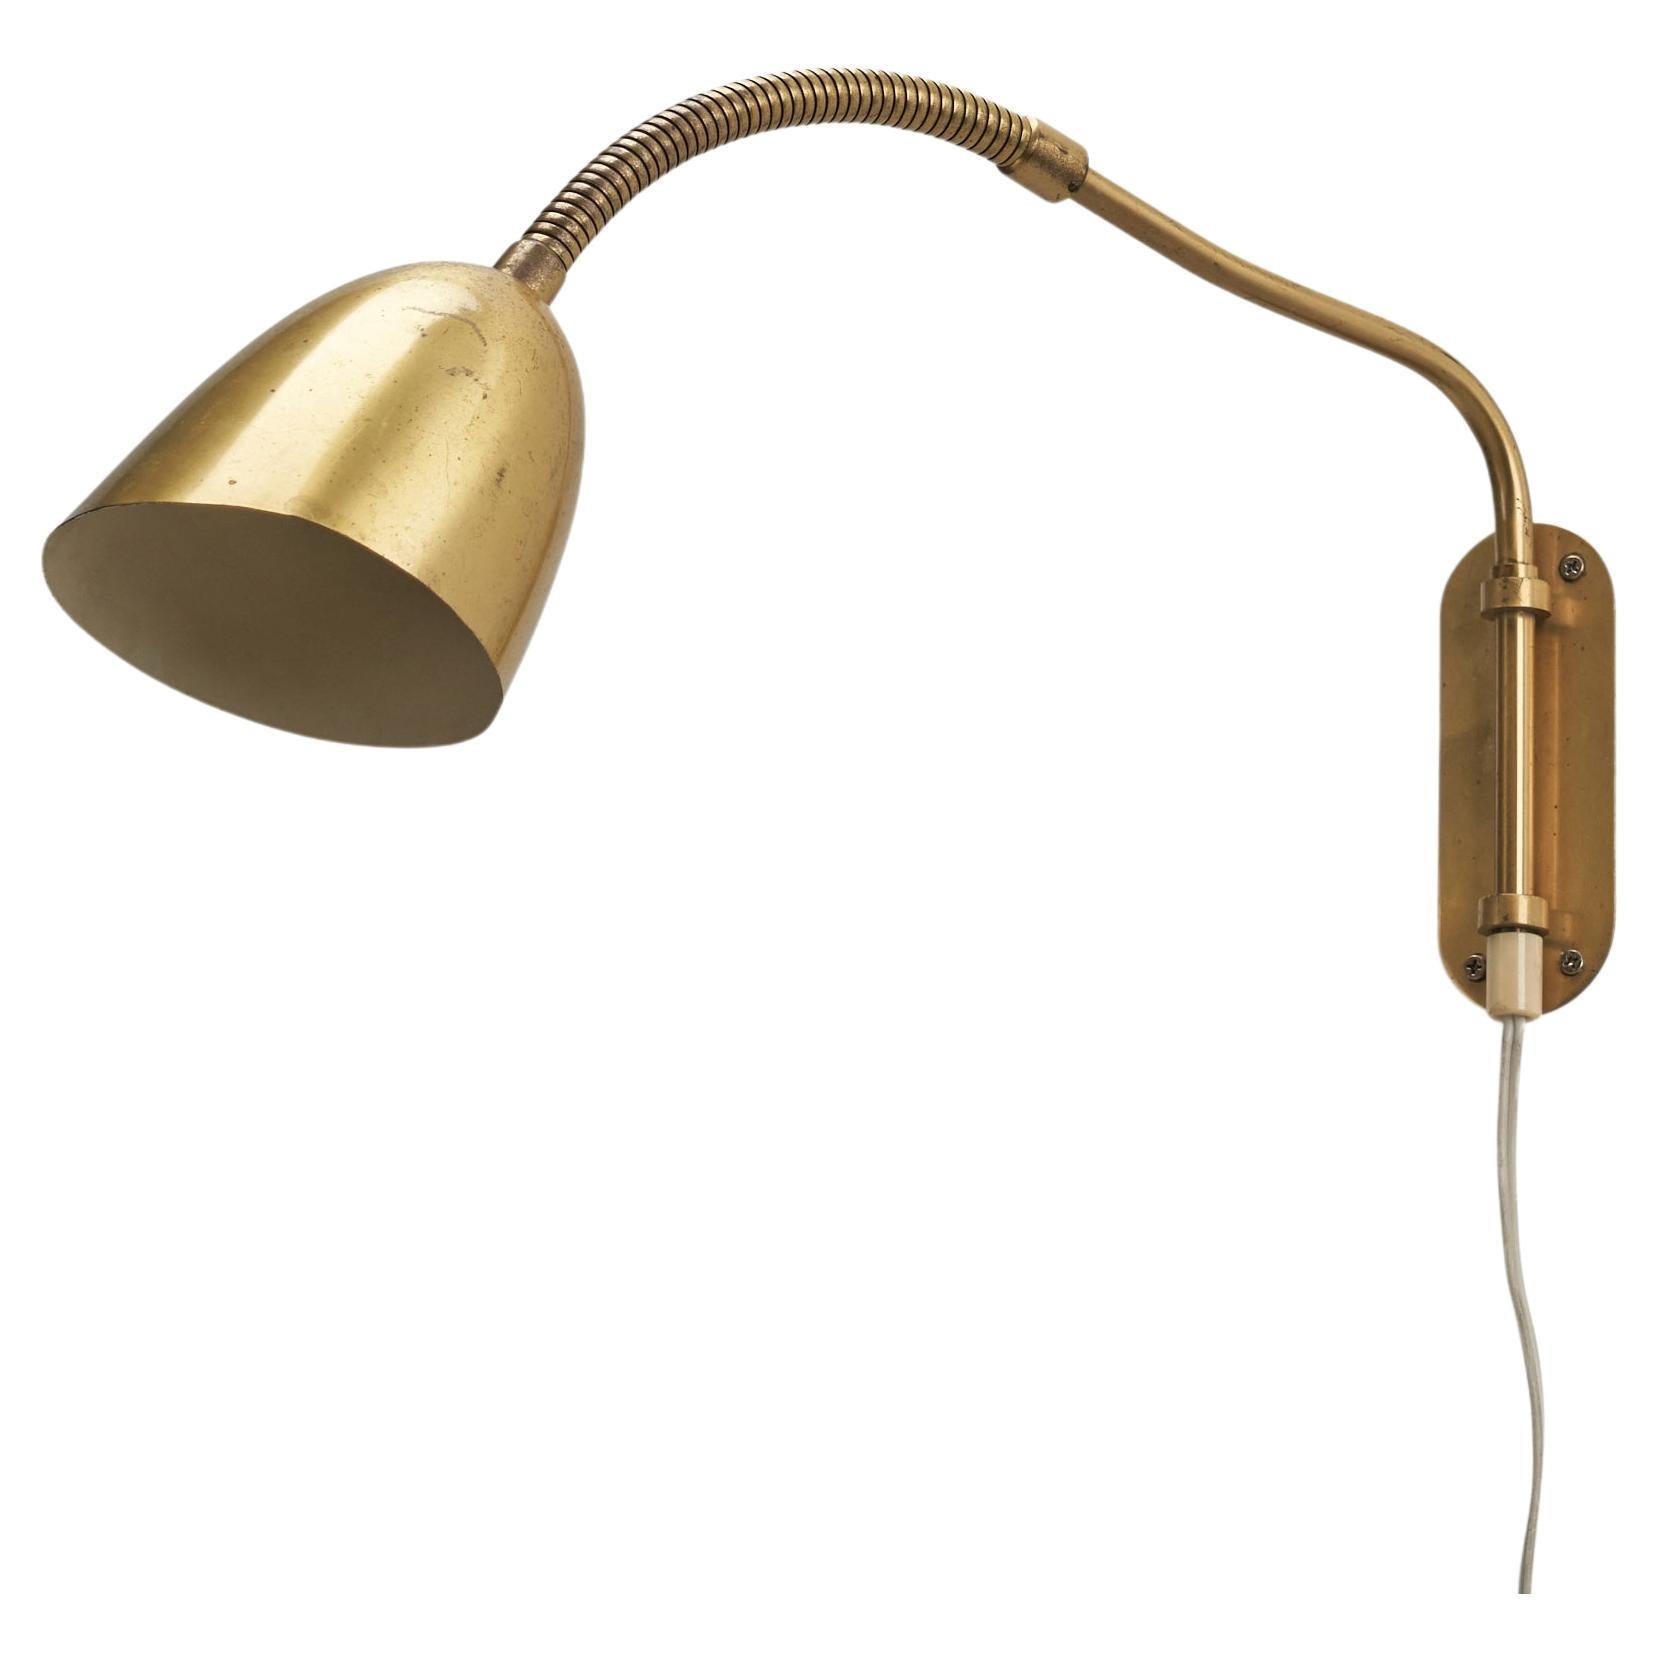 Ystad Metall, Adjustable Wall Light, Brass, Sweden, 1940s